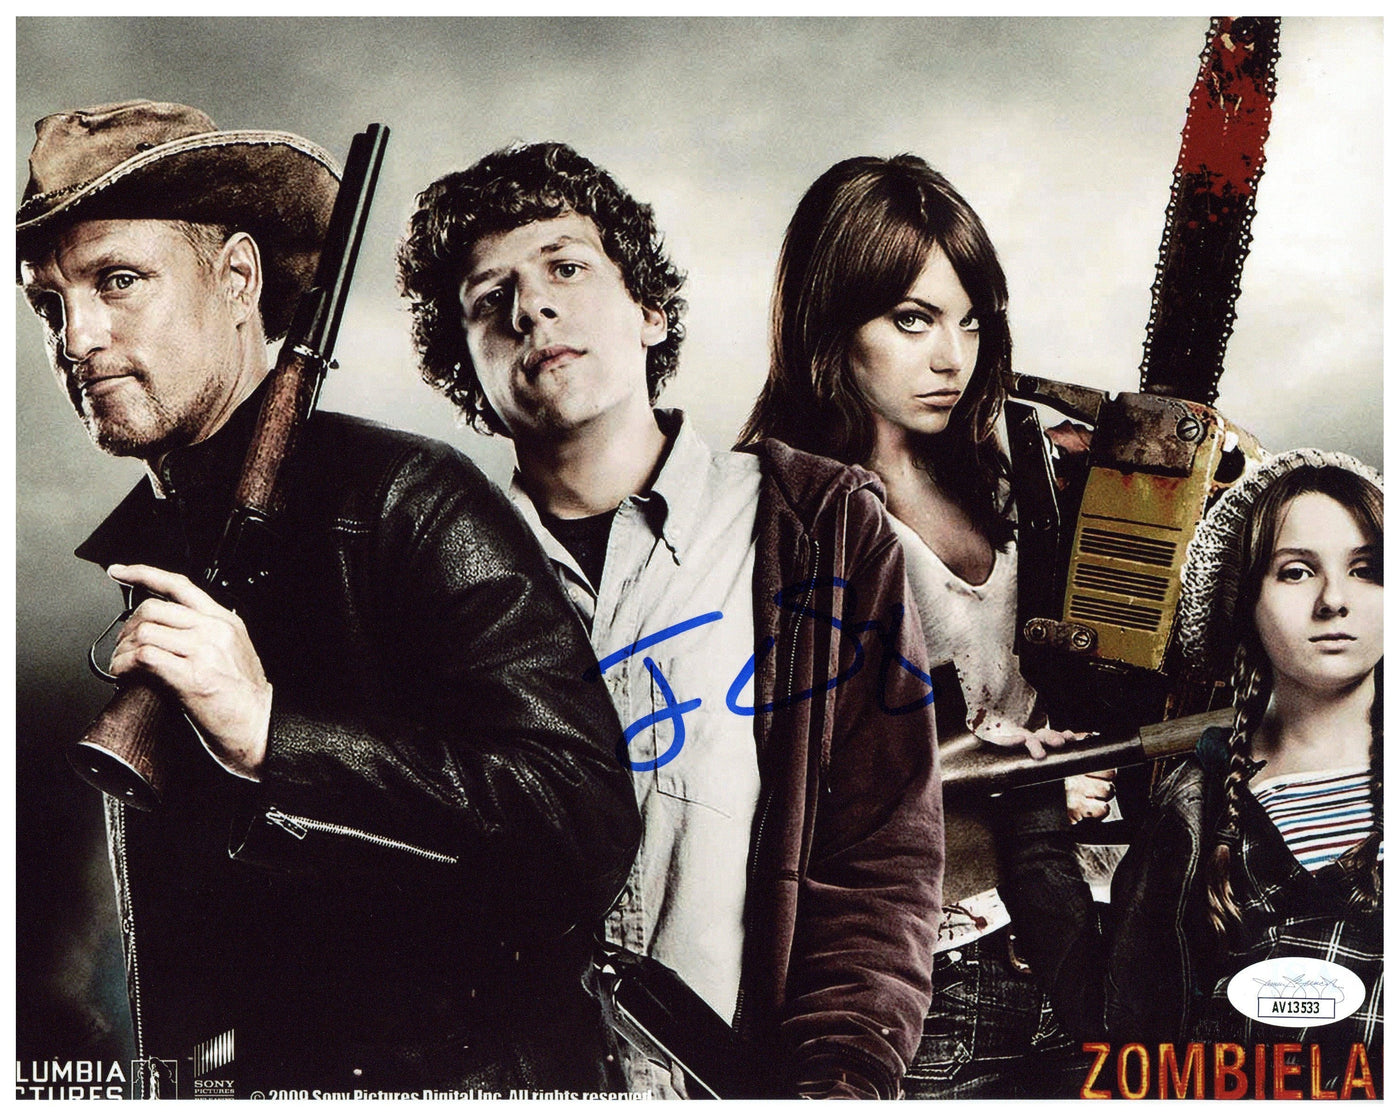 Jesse Eisenberg Autograph 8x10 Photo Zombieland Columbus Signed JSA COA #3